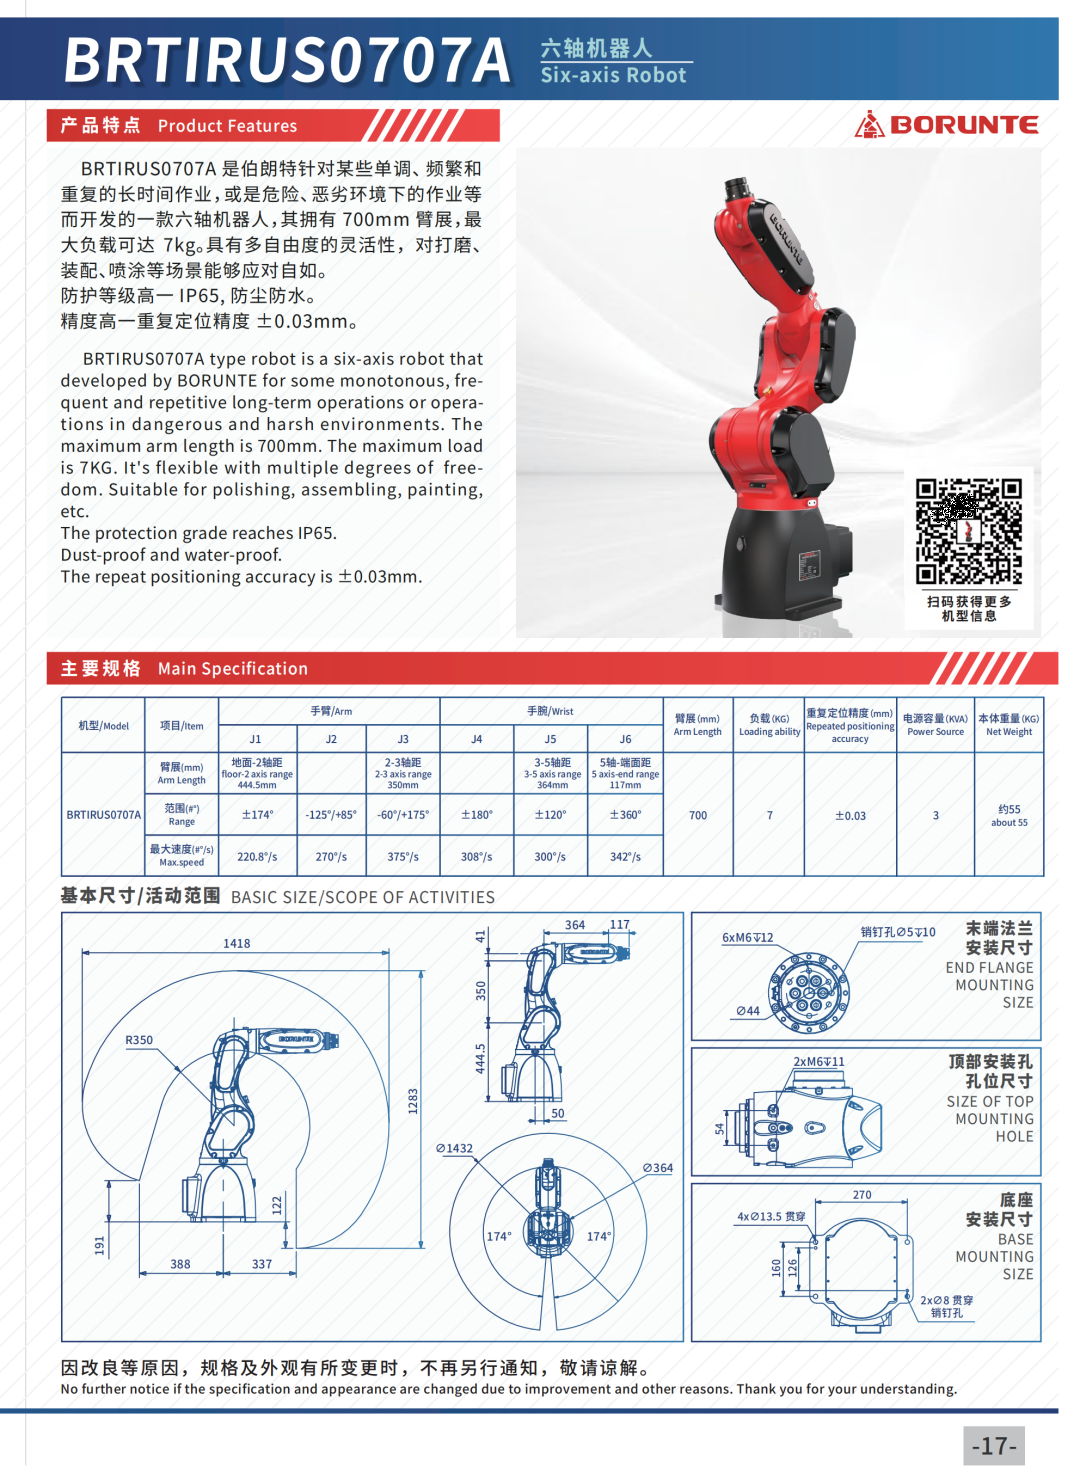 BRTIRPZ1508A Five-axis Robot 3